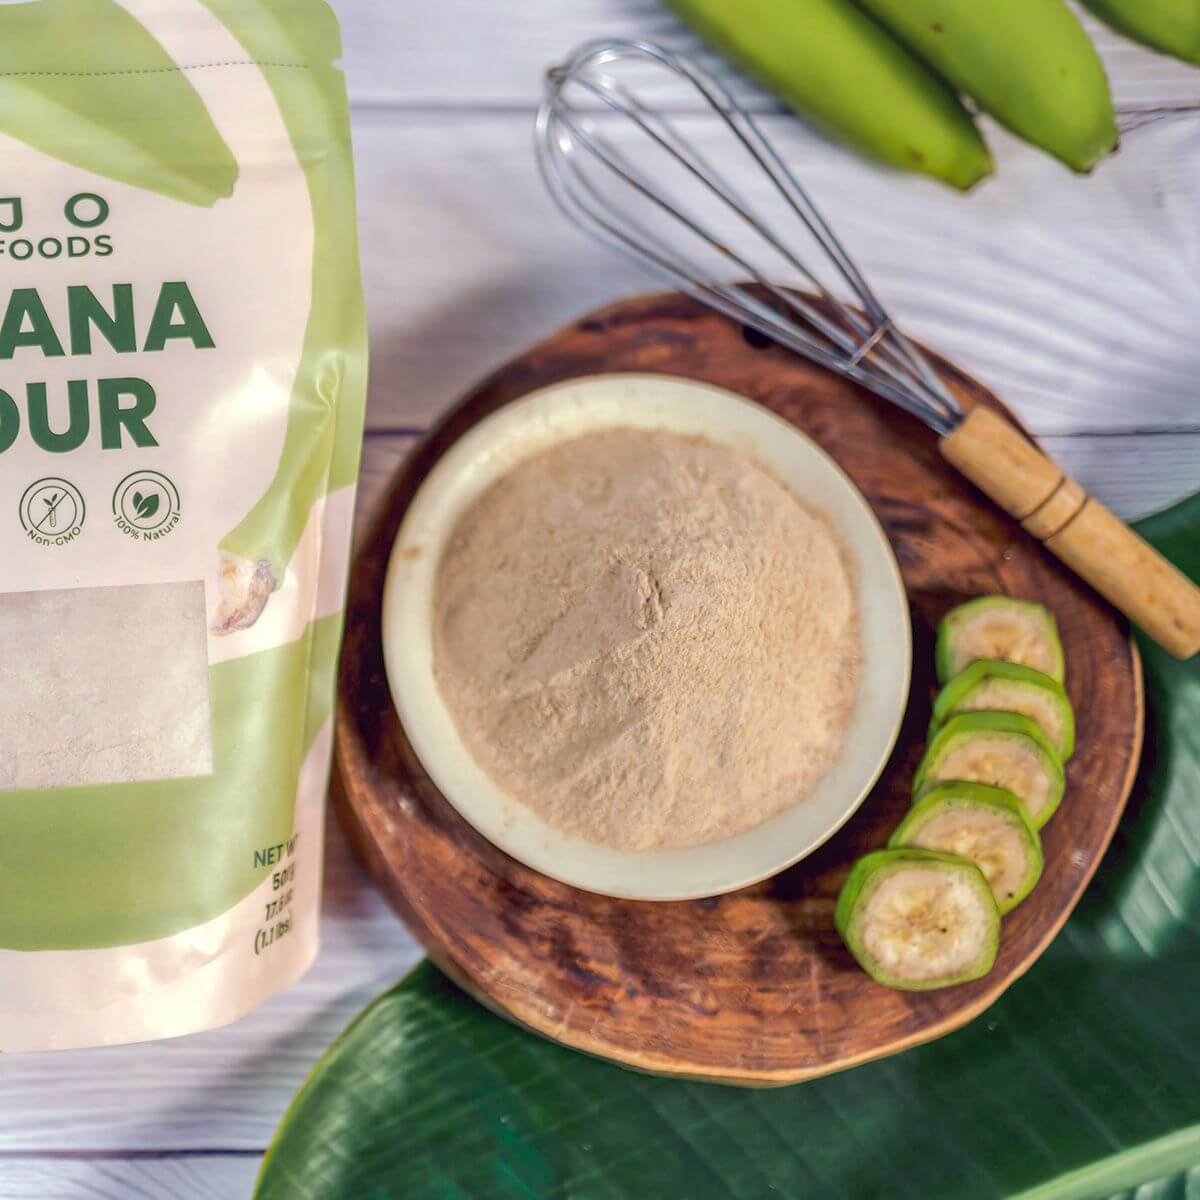 Banana Flour as a Game-changing Ingredient